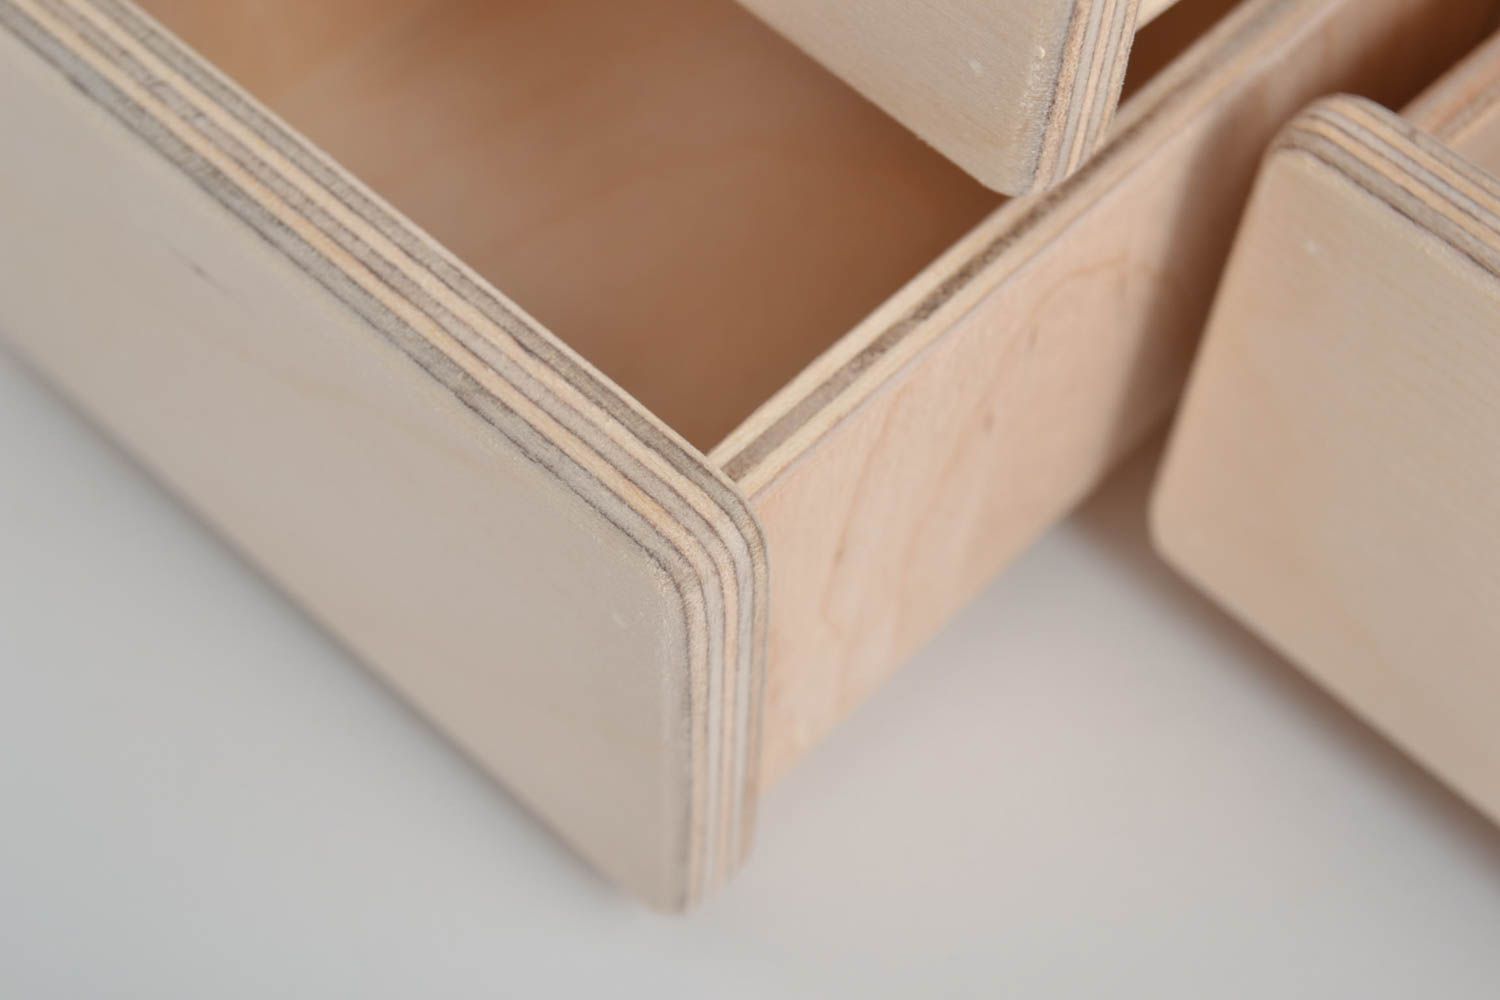 Unusual handmade wooden blank box dresser art supplies wooden craft gift ideas photo 4